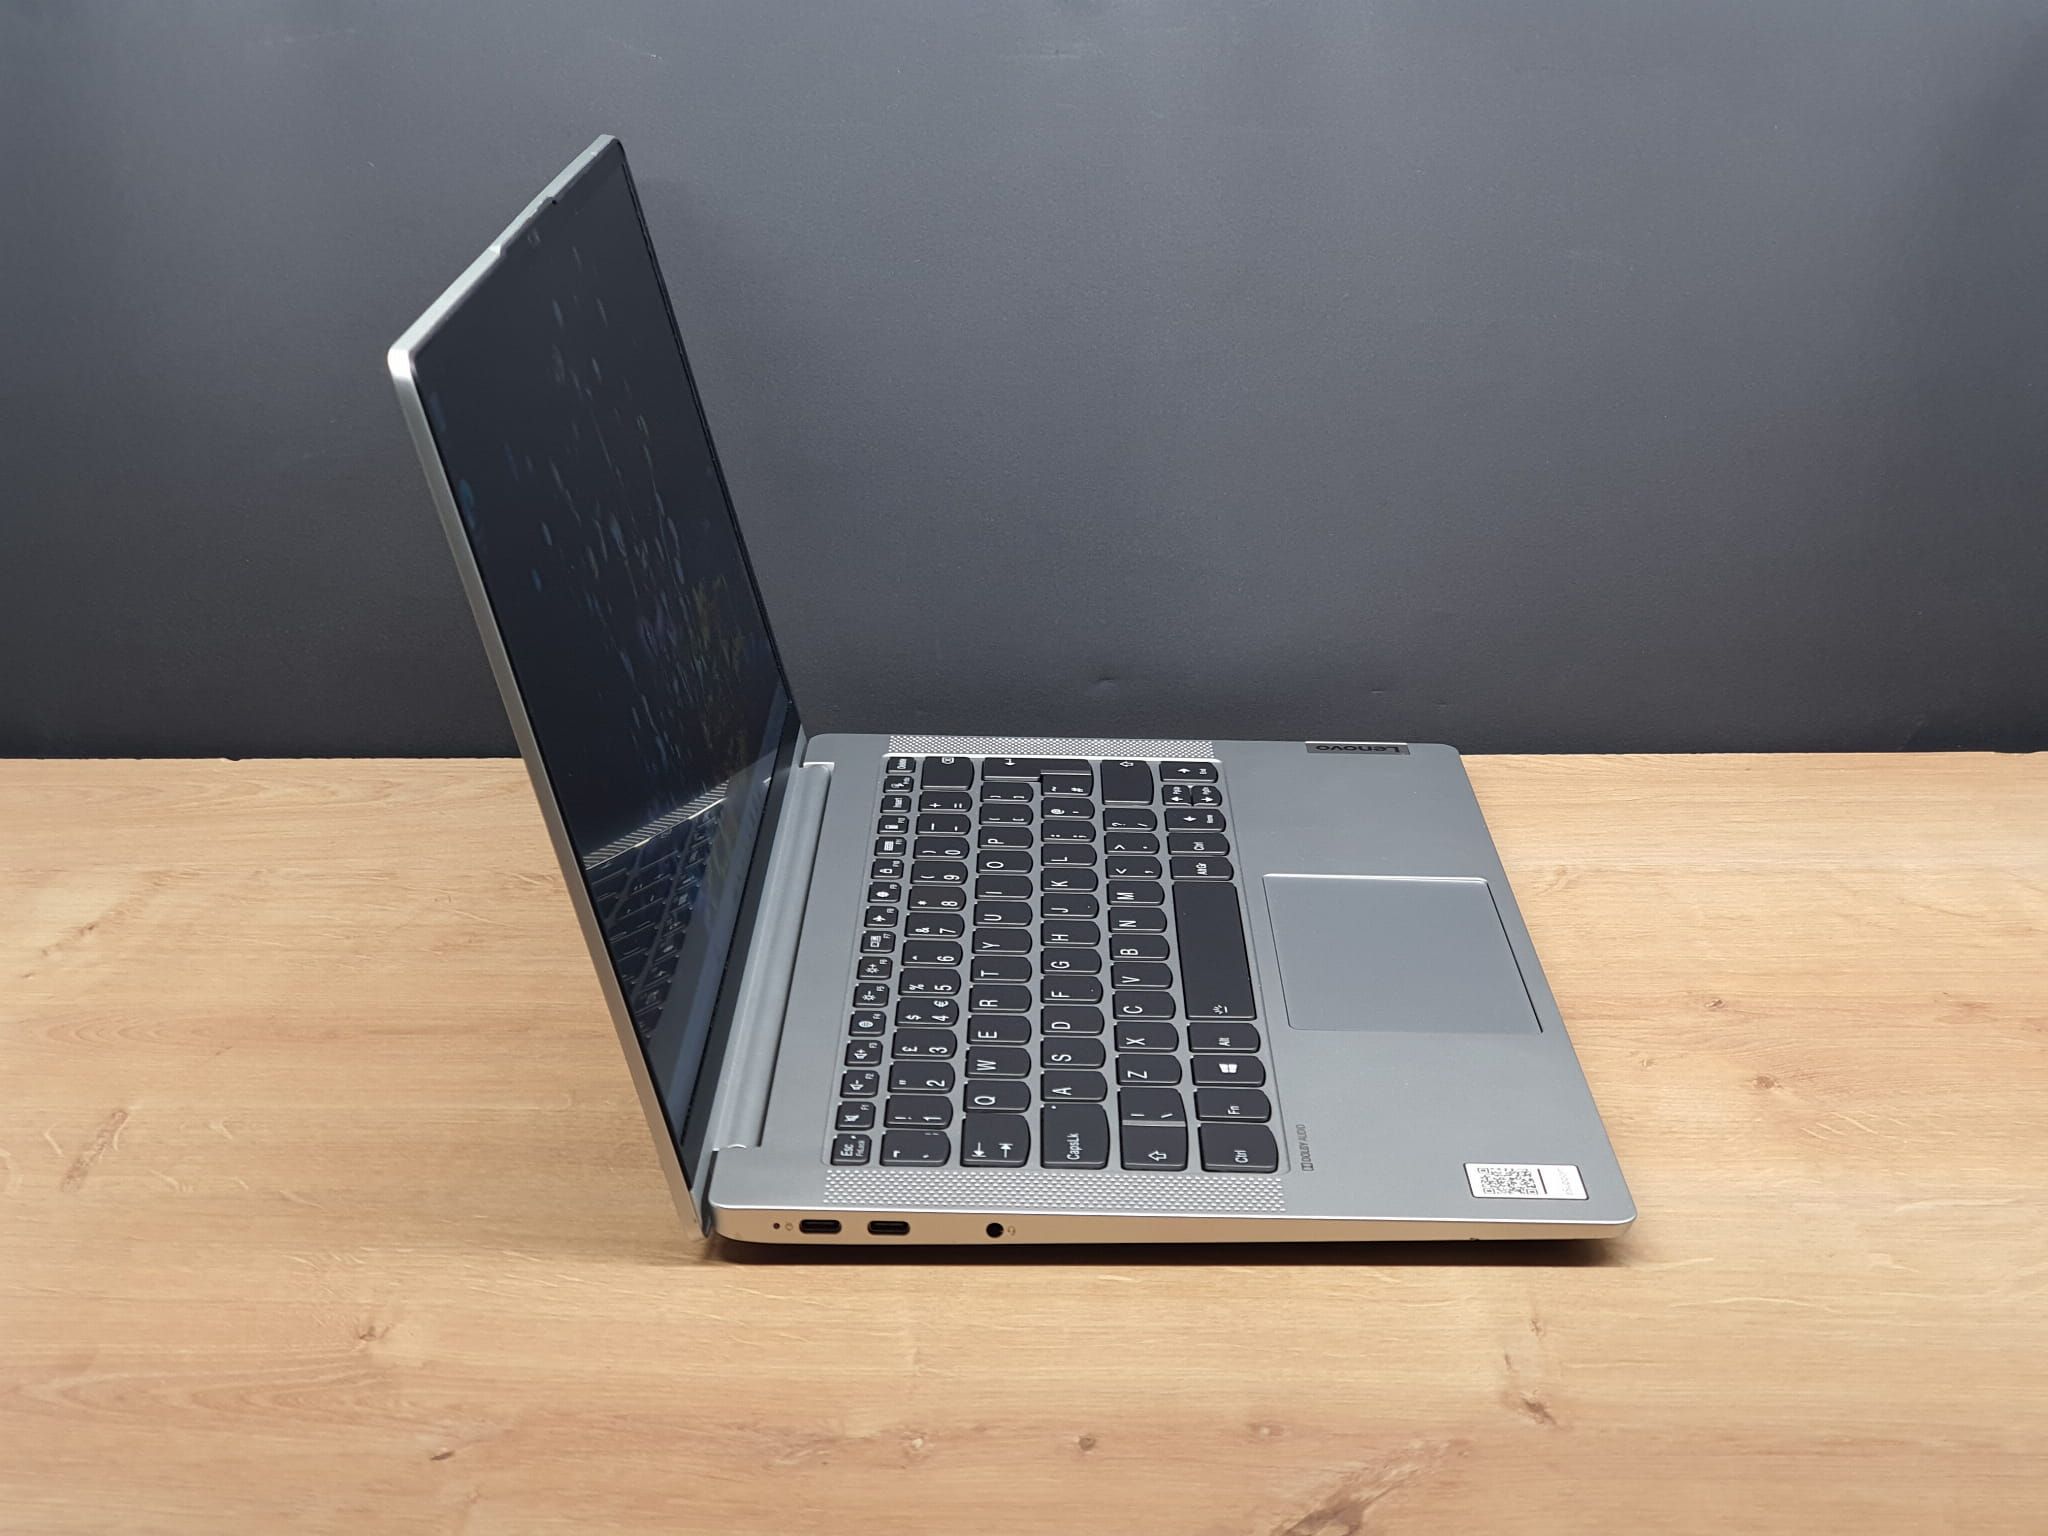 Laptop Lenovo IdeaPad 14Q8C05  | Snapdragon 8c / FHD/8RAM/256GB OUTLET